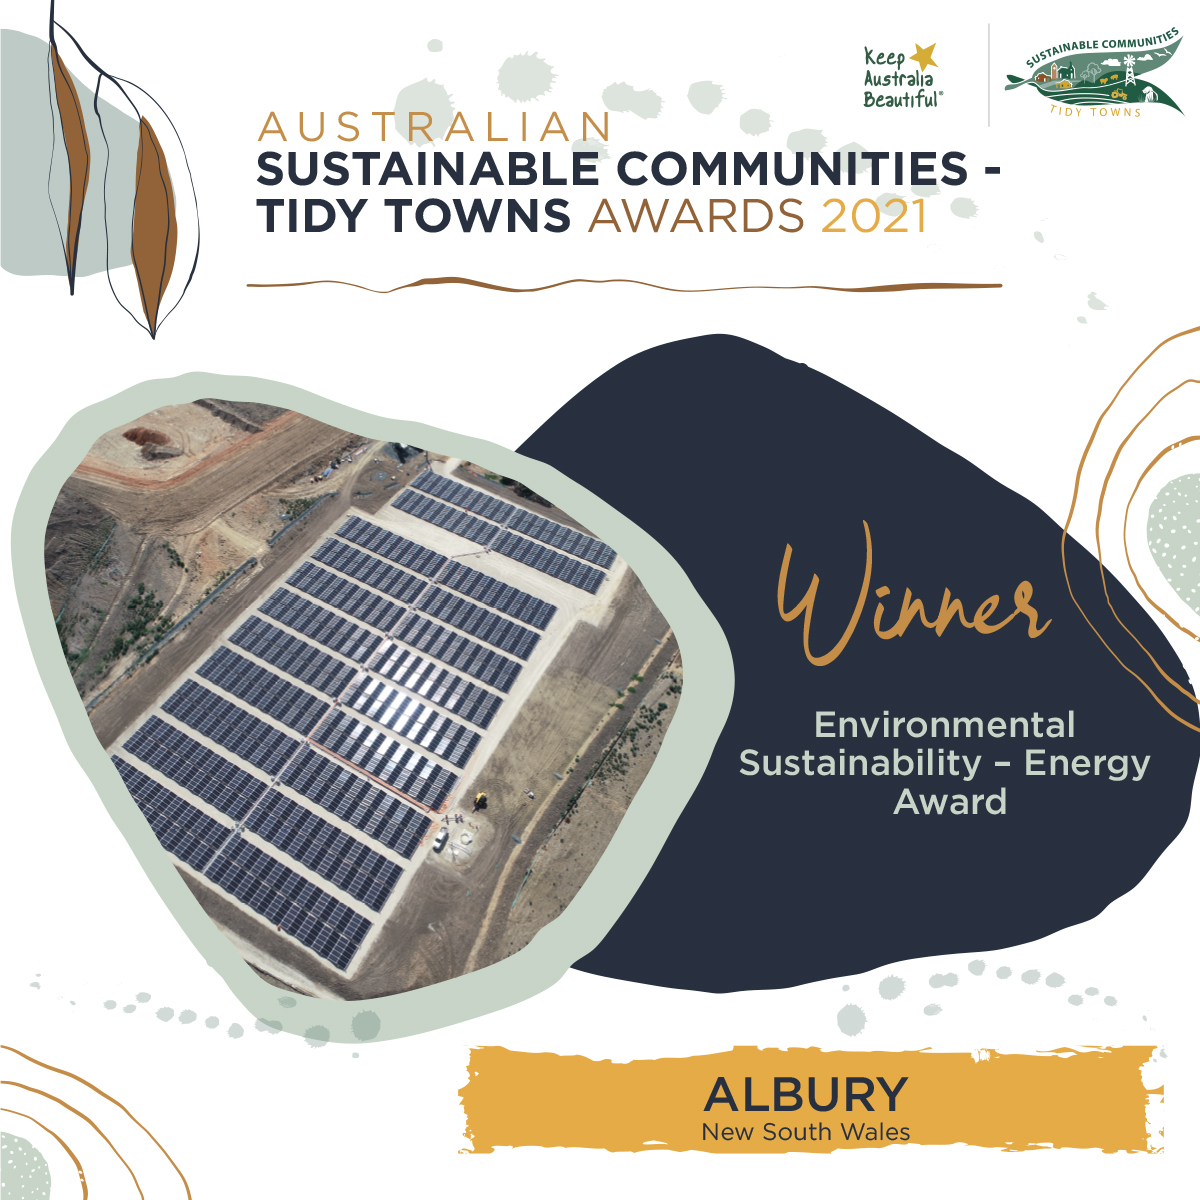 The Environmental Sustainability Energy Award goes to Albury, NSW 
#TidyTowns #SustainableCommunities #albury #alburycitycouncil @AlburyCity @bordermail @mmmtheborder @hittheborder @ABCGOulburnMurray @Radio2AY